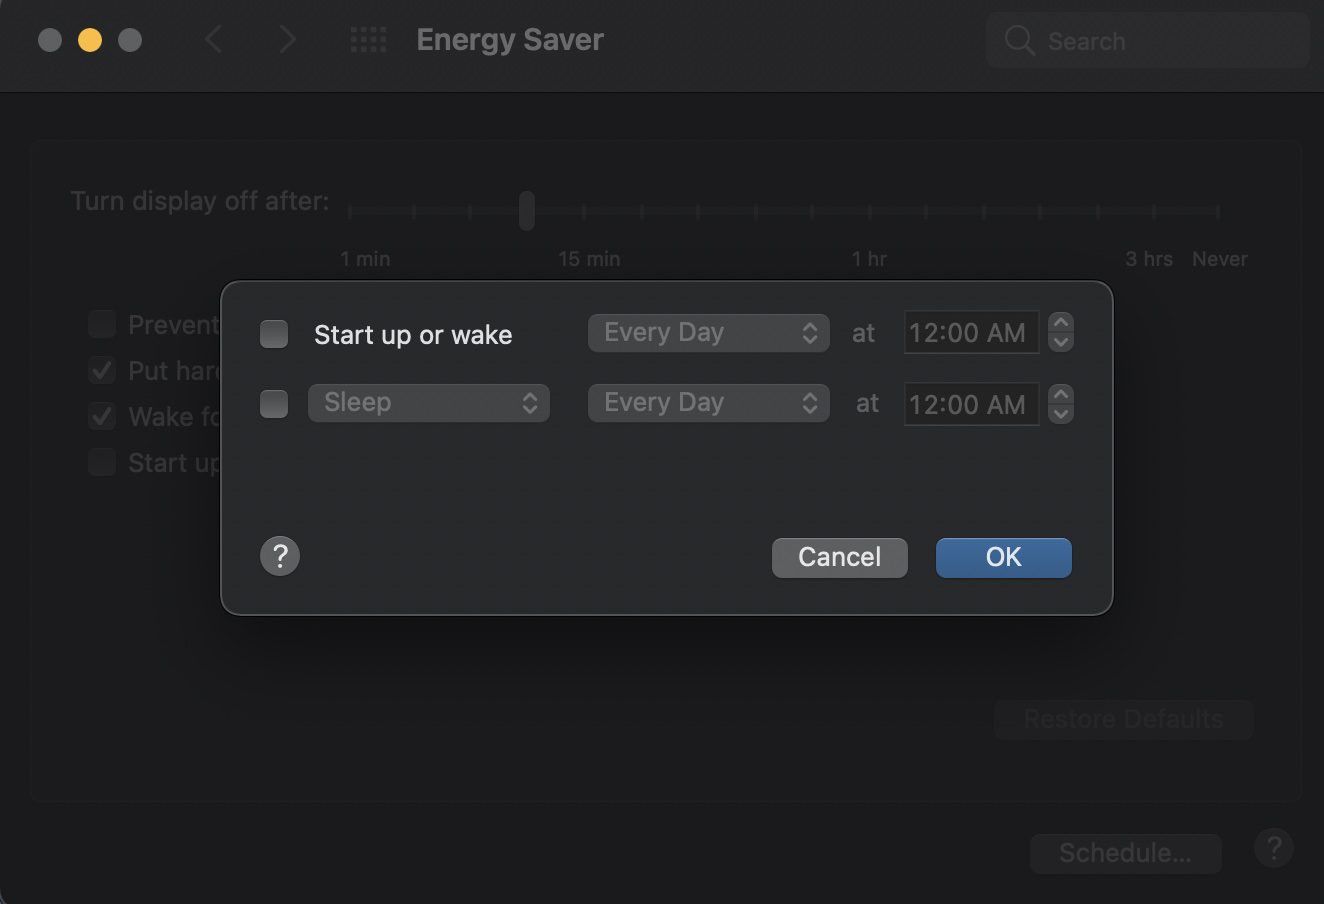 Energy saver start up schedule